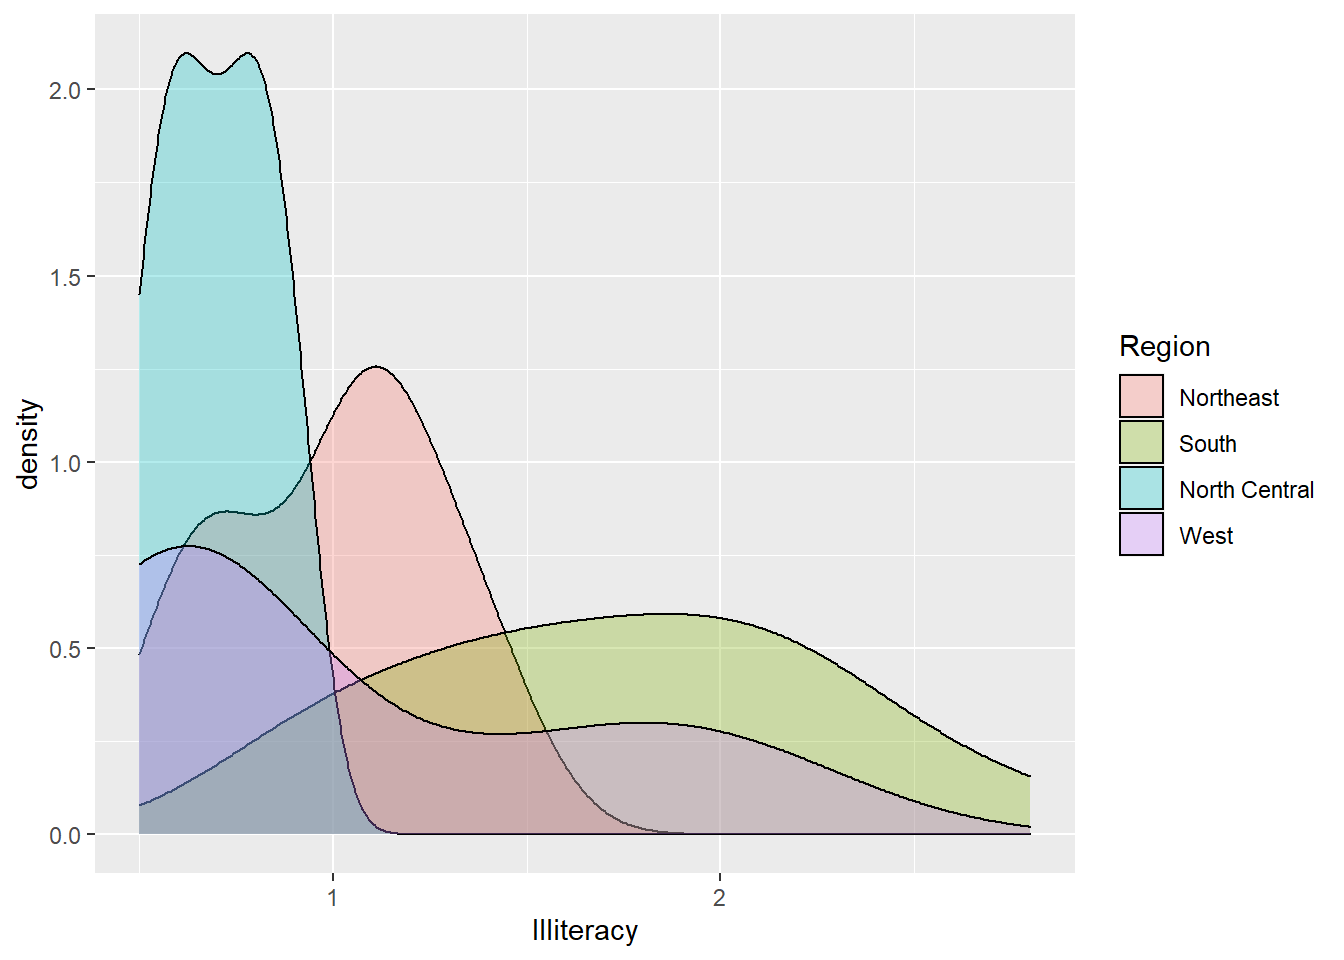 Illiteracy distribution by region.